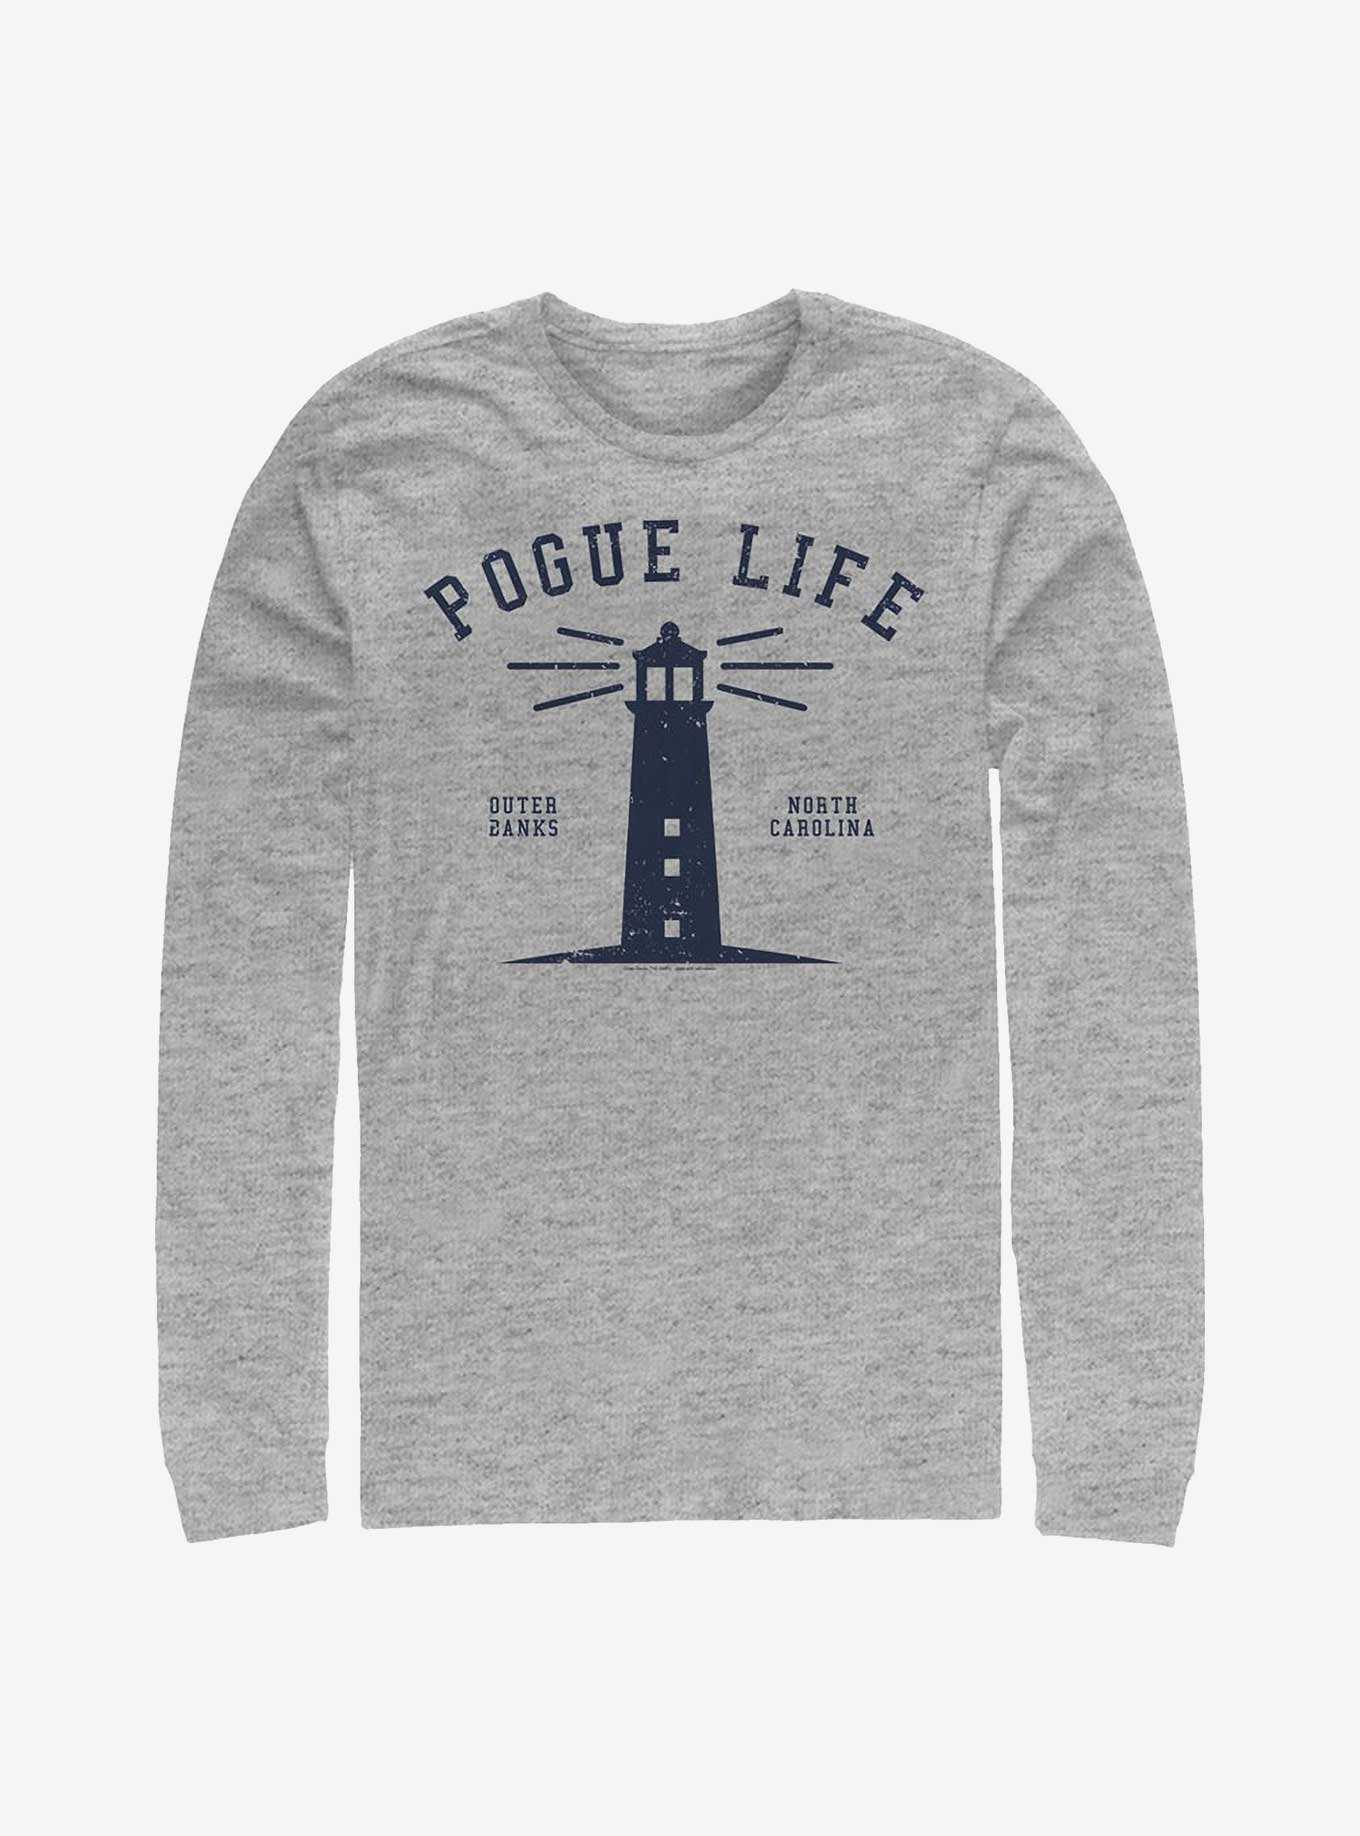 Outer Banks Pogue Life Lifehouse Long-Sleeve T-Shirt, , hi-res